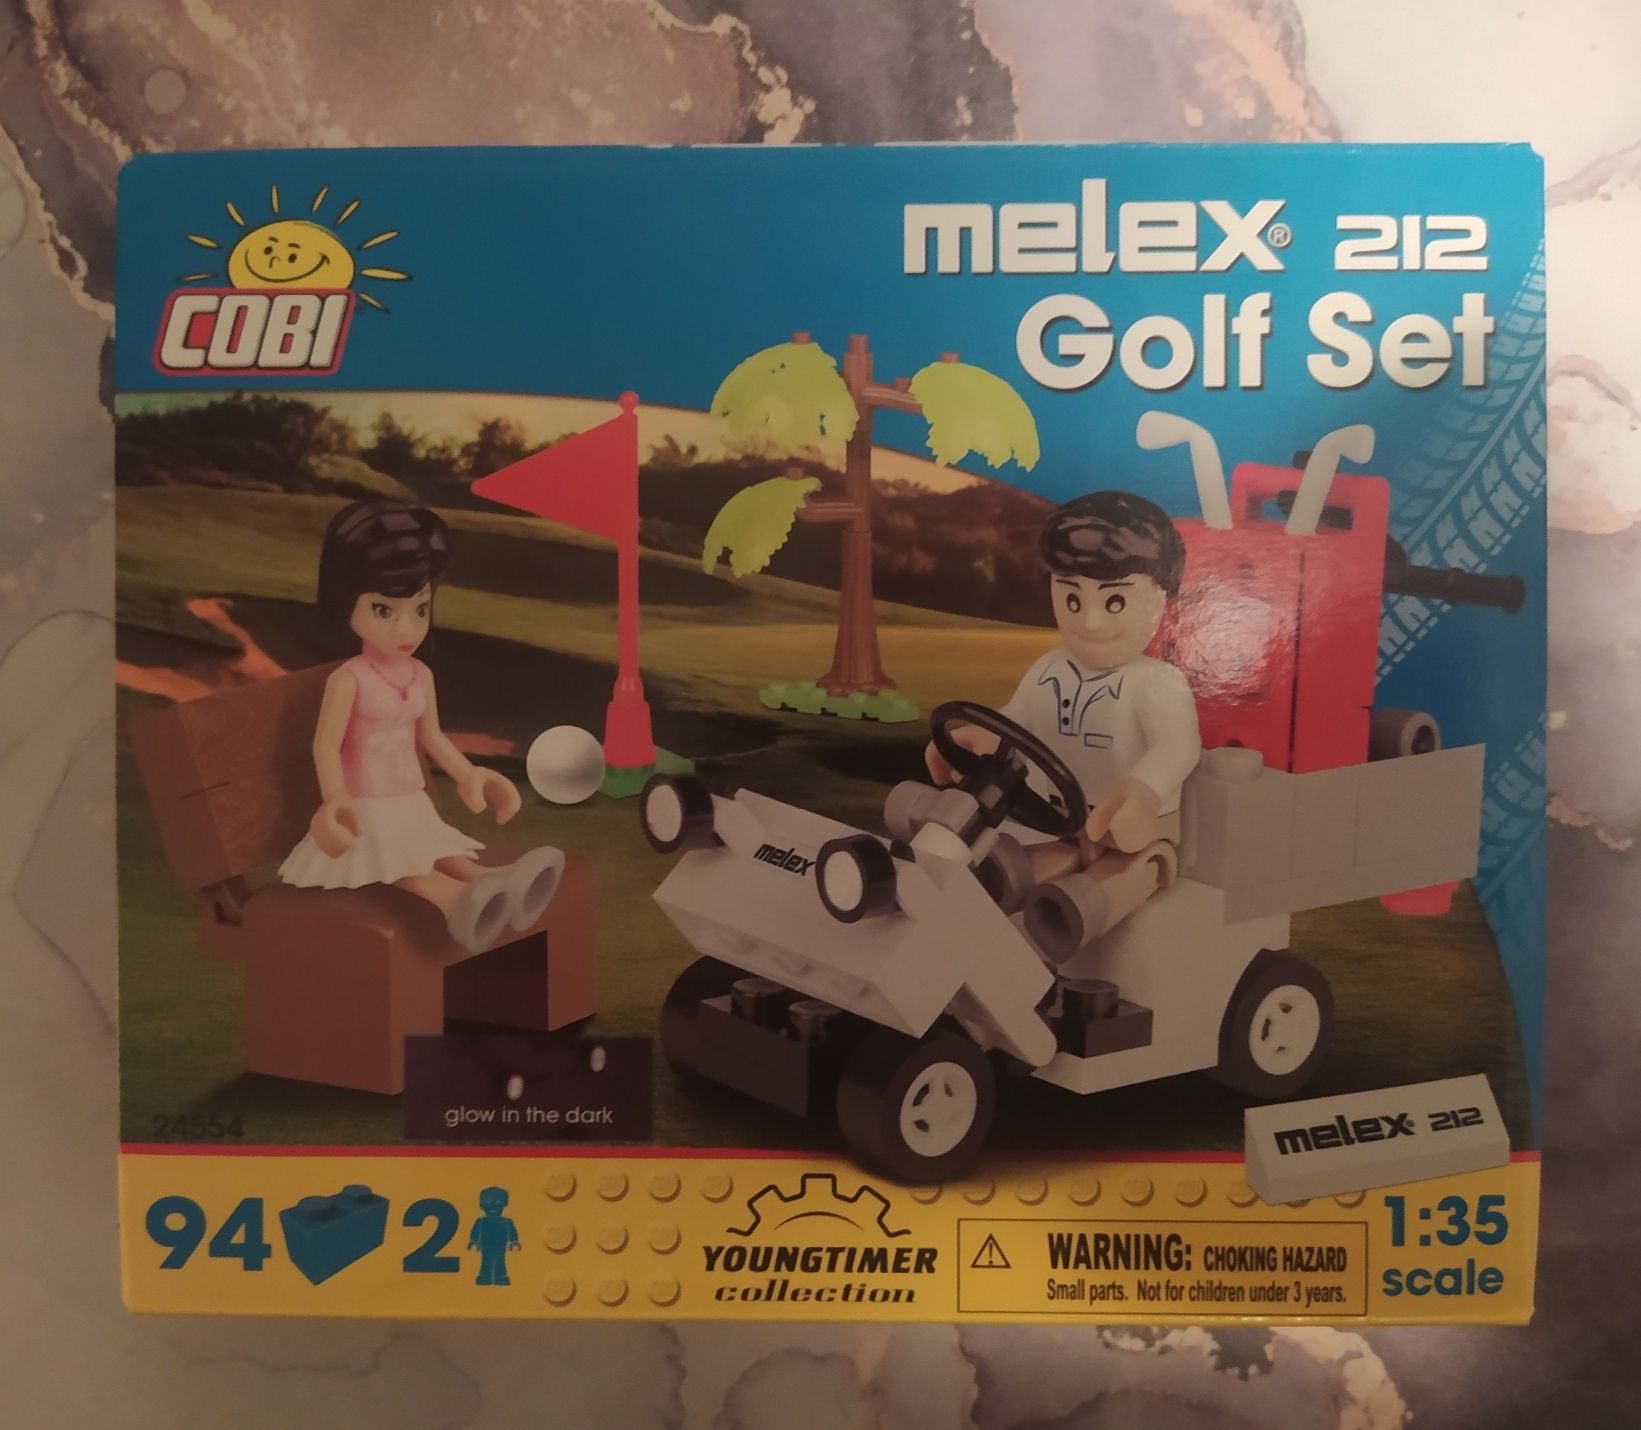 Melex 212 Golf Set COBI klocki youngtimer collection